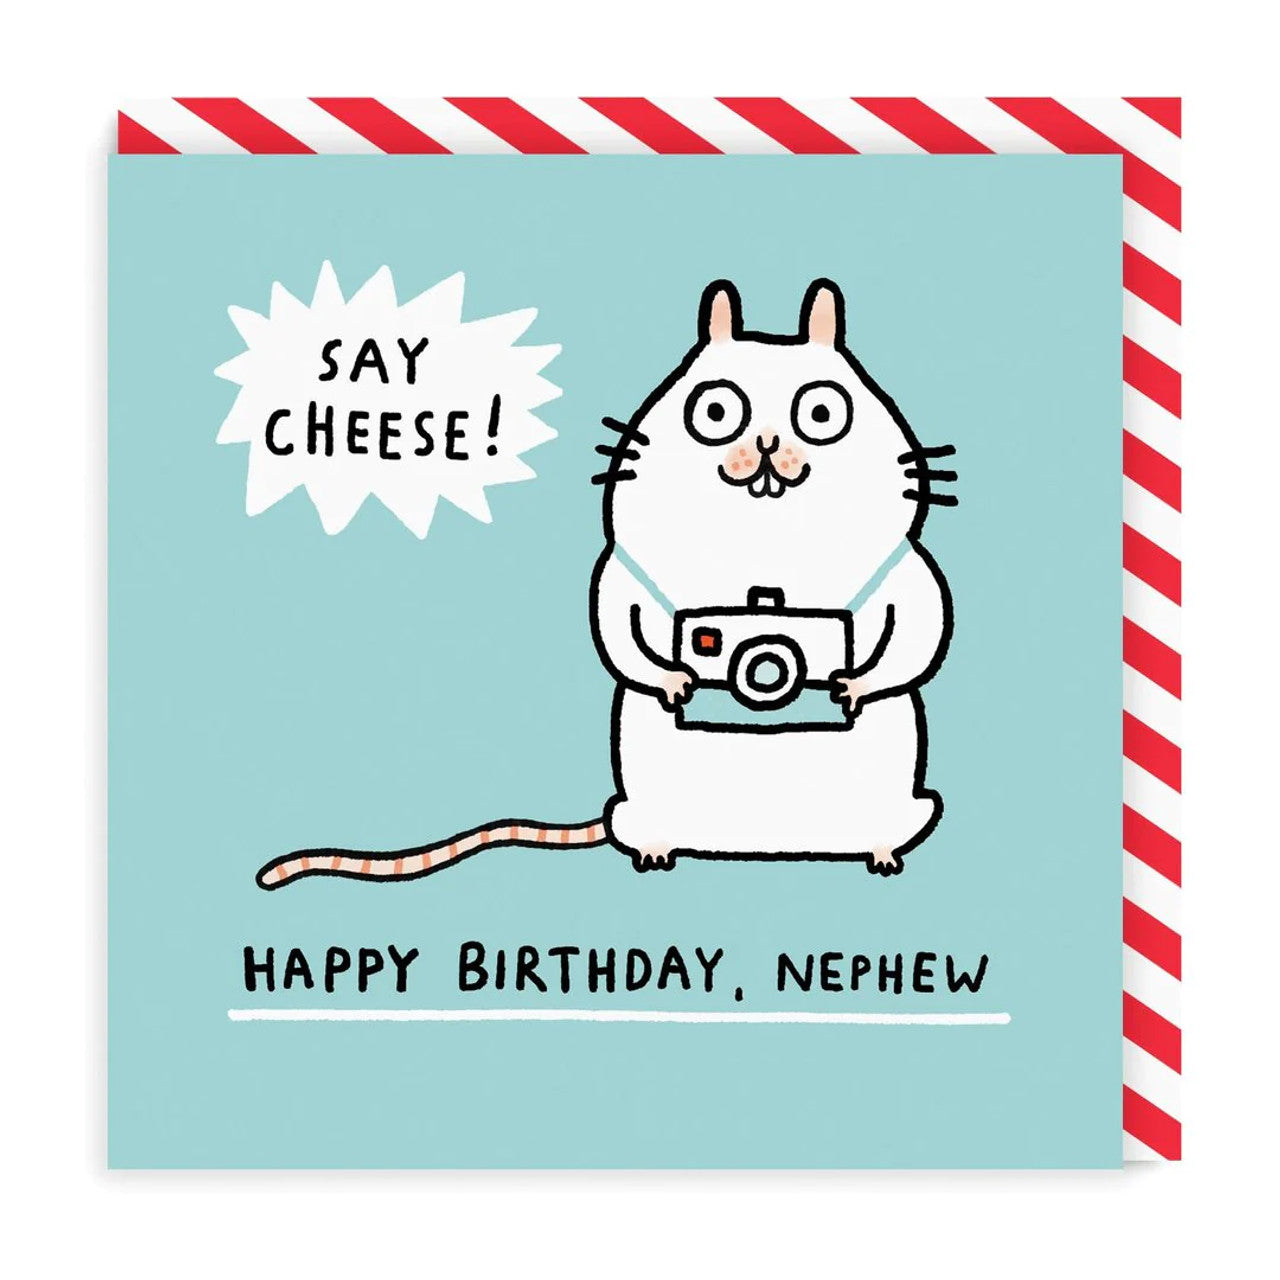 Nephew Birthday Card text reads "Say Cheese! Happy Birthday, Nephew"